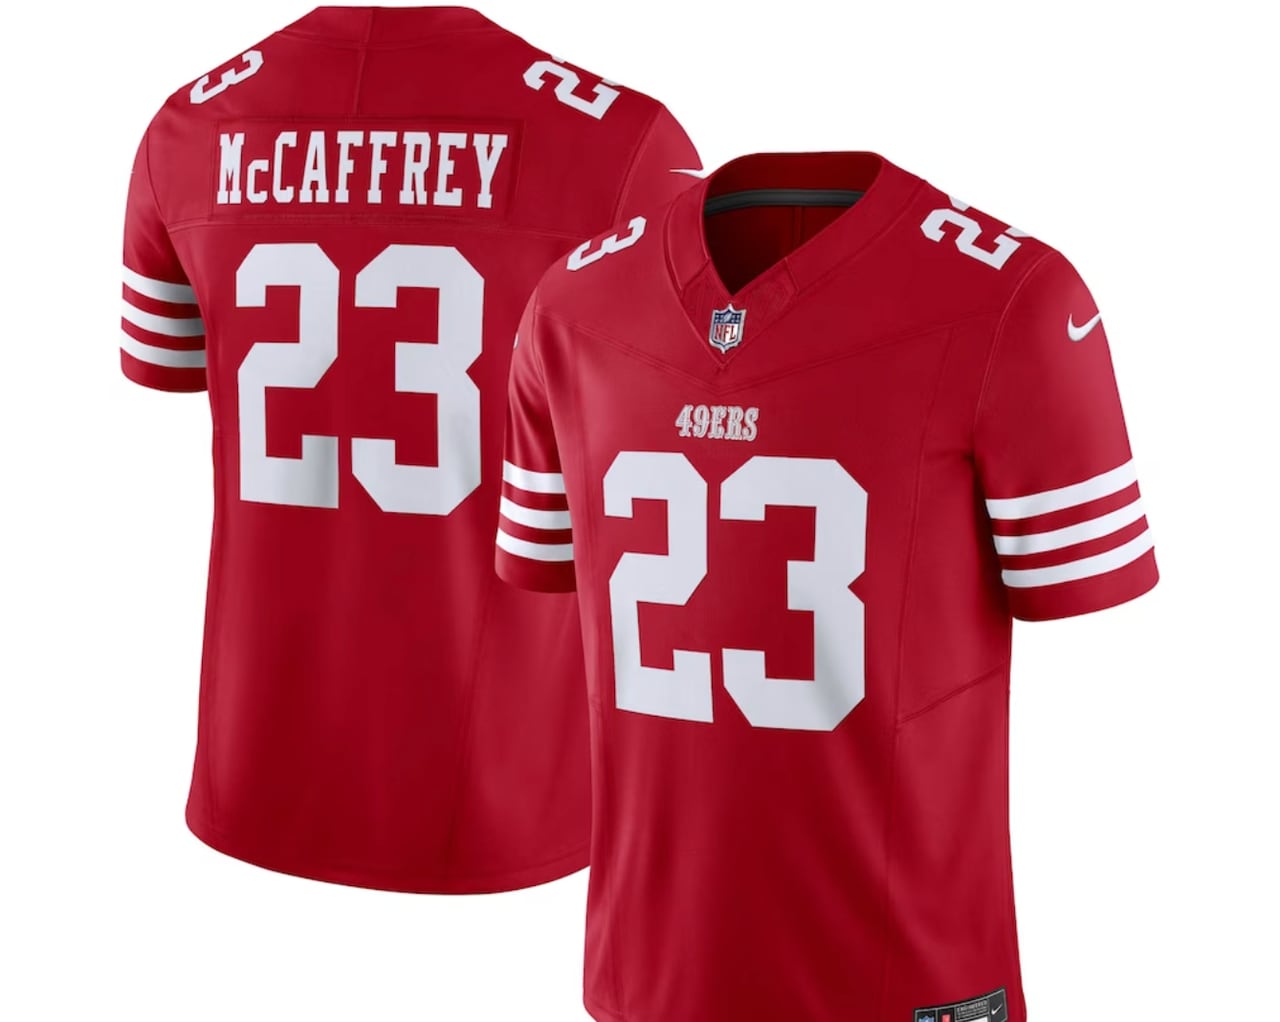 Christian McCaffrey FUSE jersey